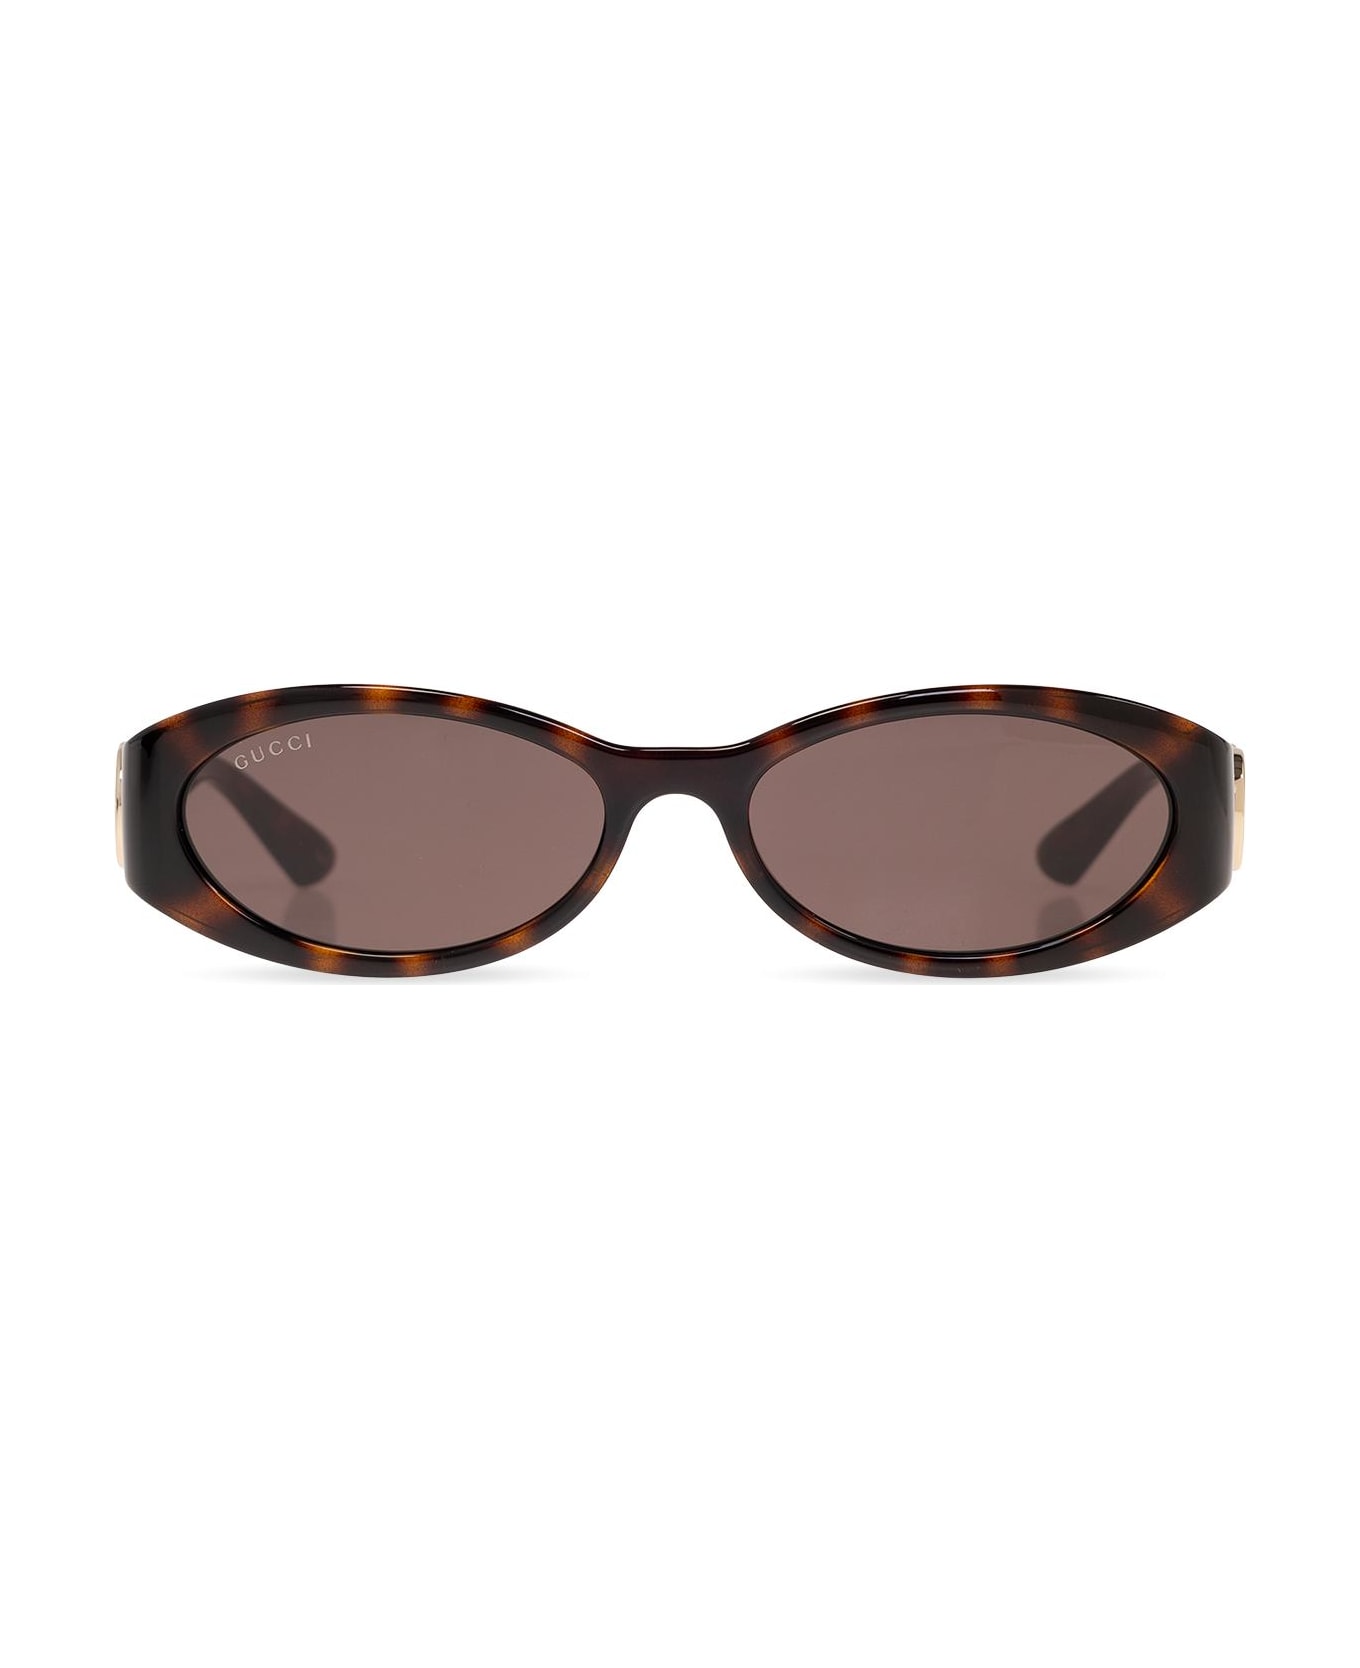 Gucci Eyewear Gucci Sunglasses - Havana